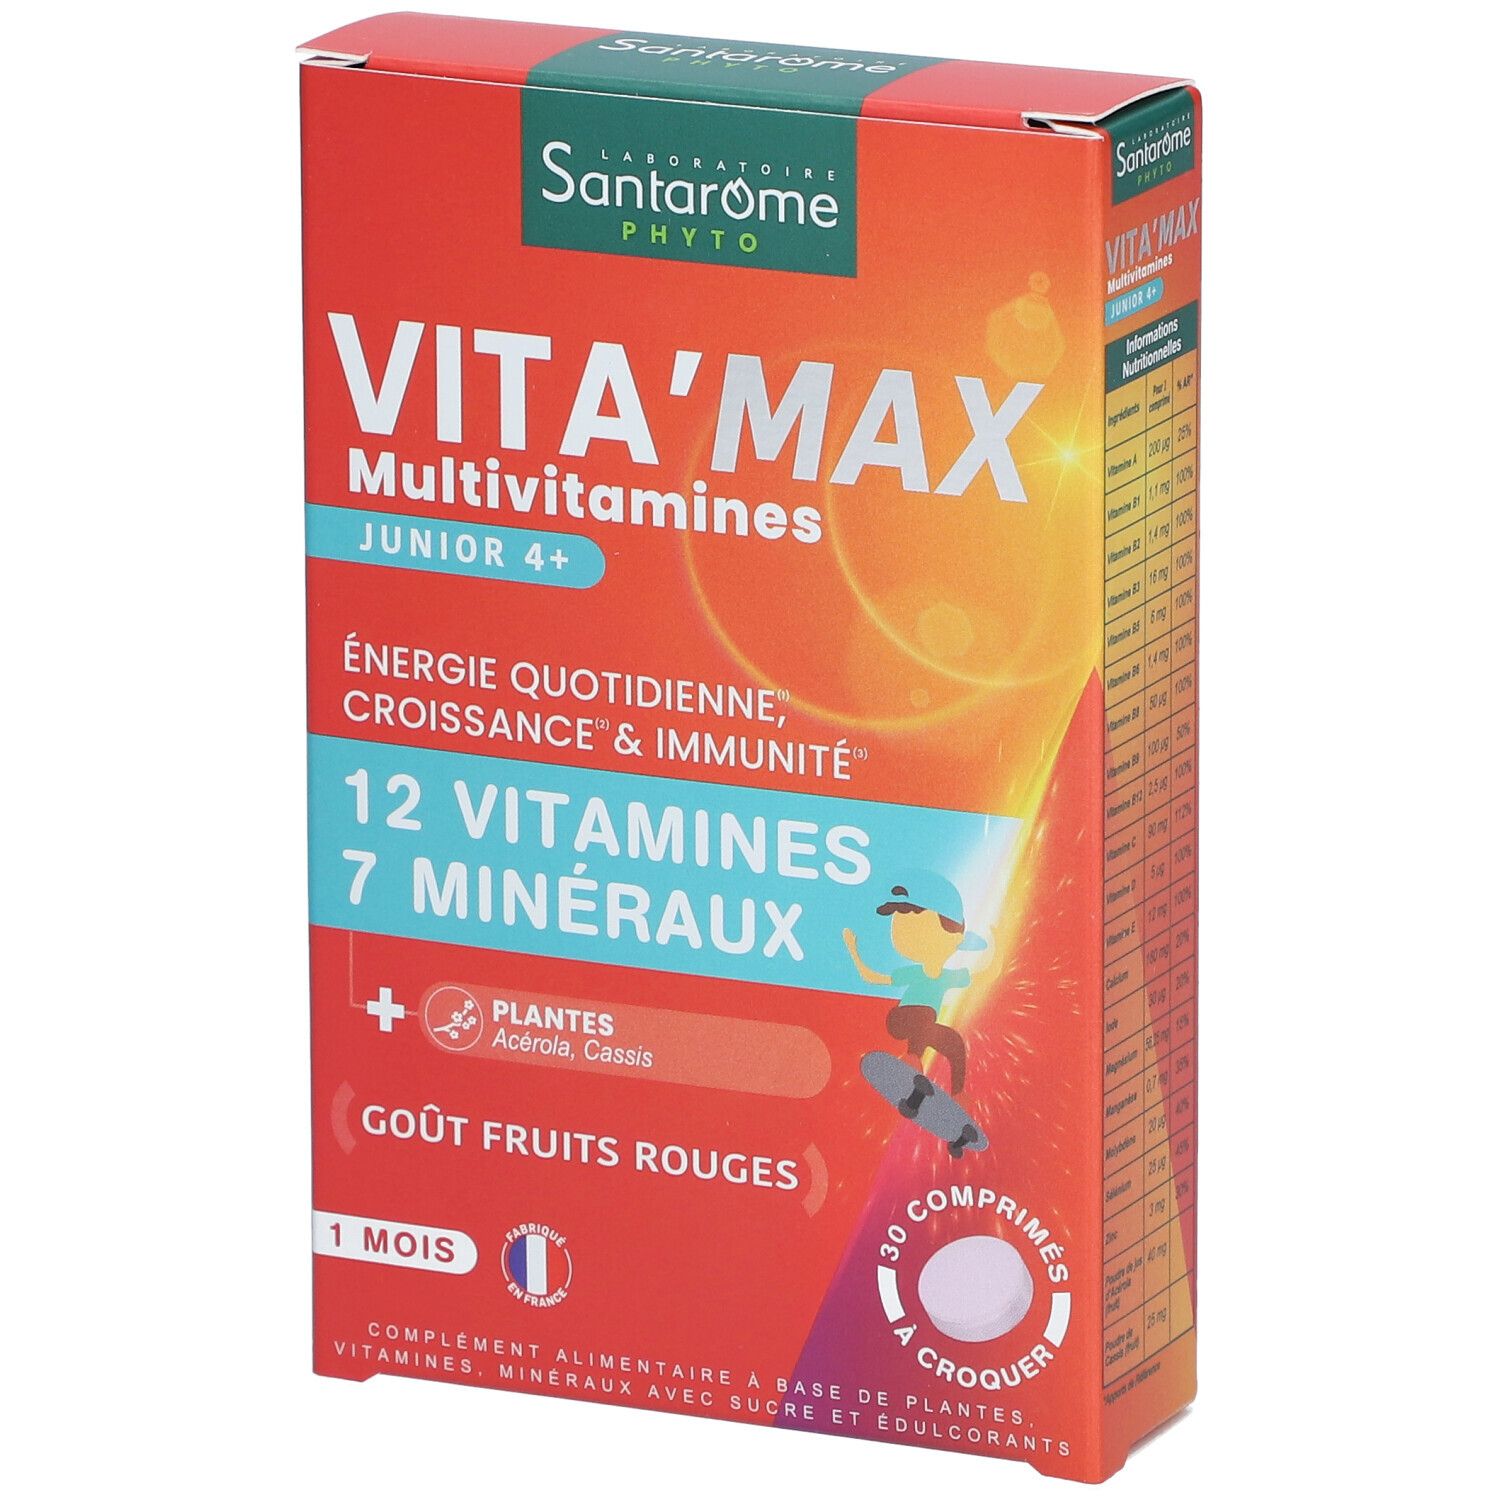 Santarome BIO Multivitamines Vita'Max Junior - 30 comprimés à croquer